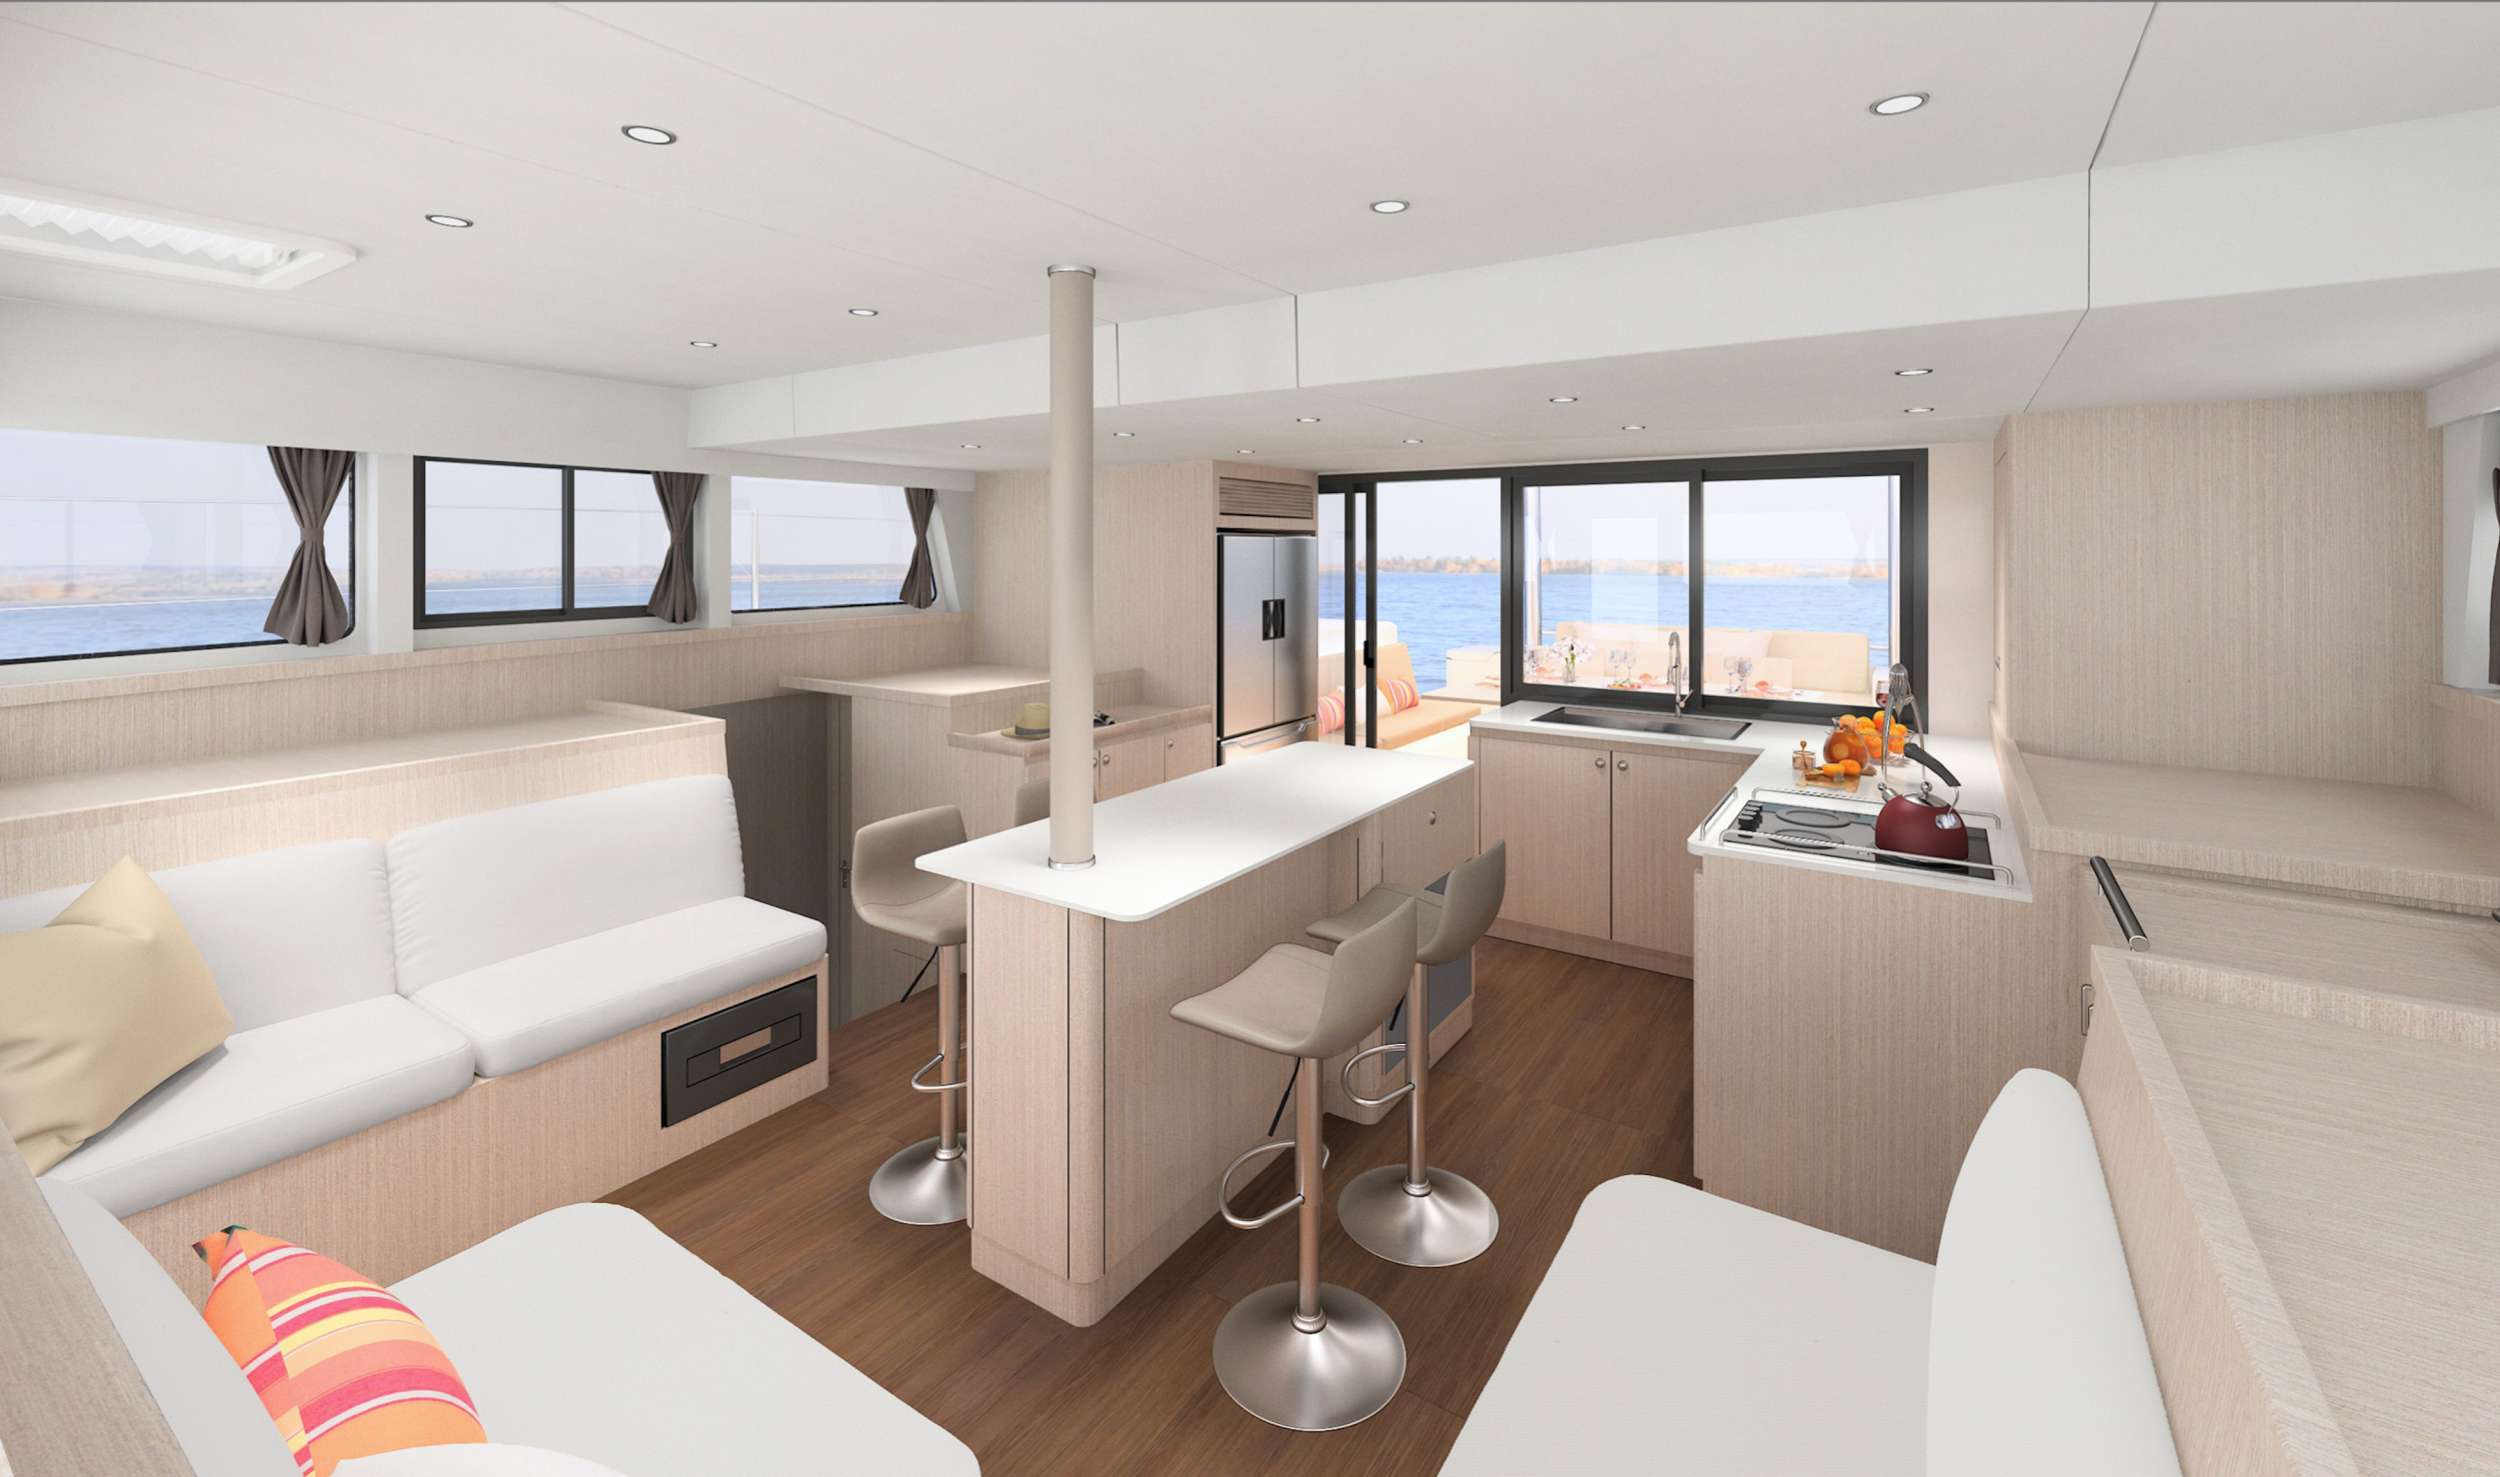 FLOR DE LUNA - Luxury yacht charter St Martin & Boat hire in Caribbean 4